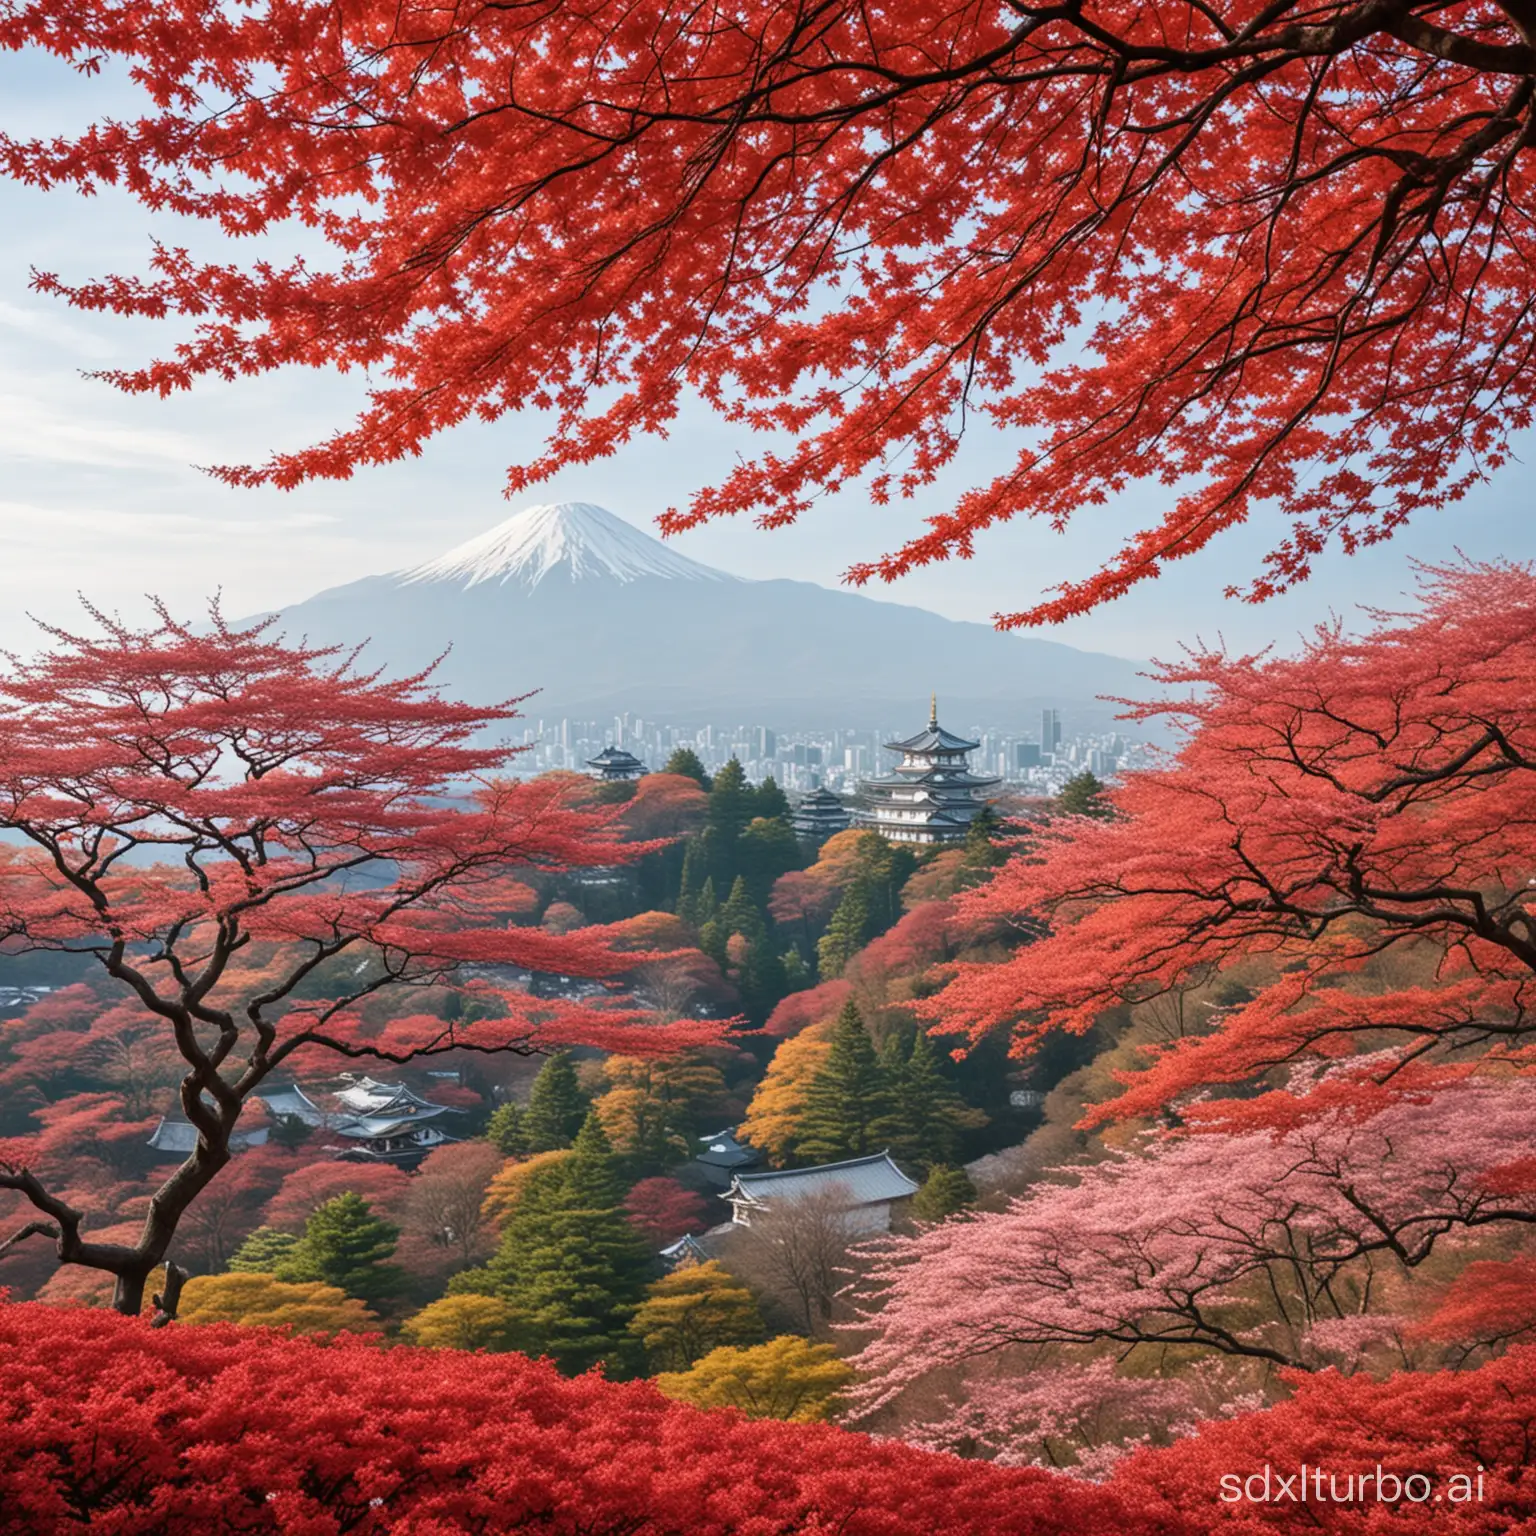 Japan, Sakura and Red Maples